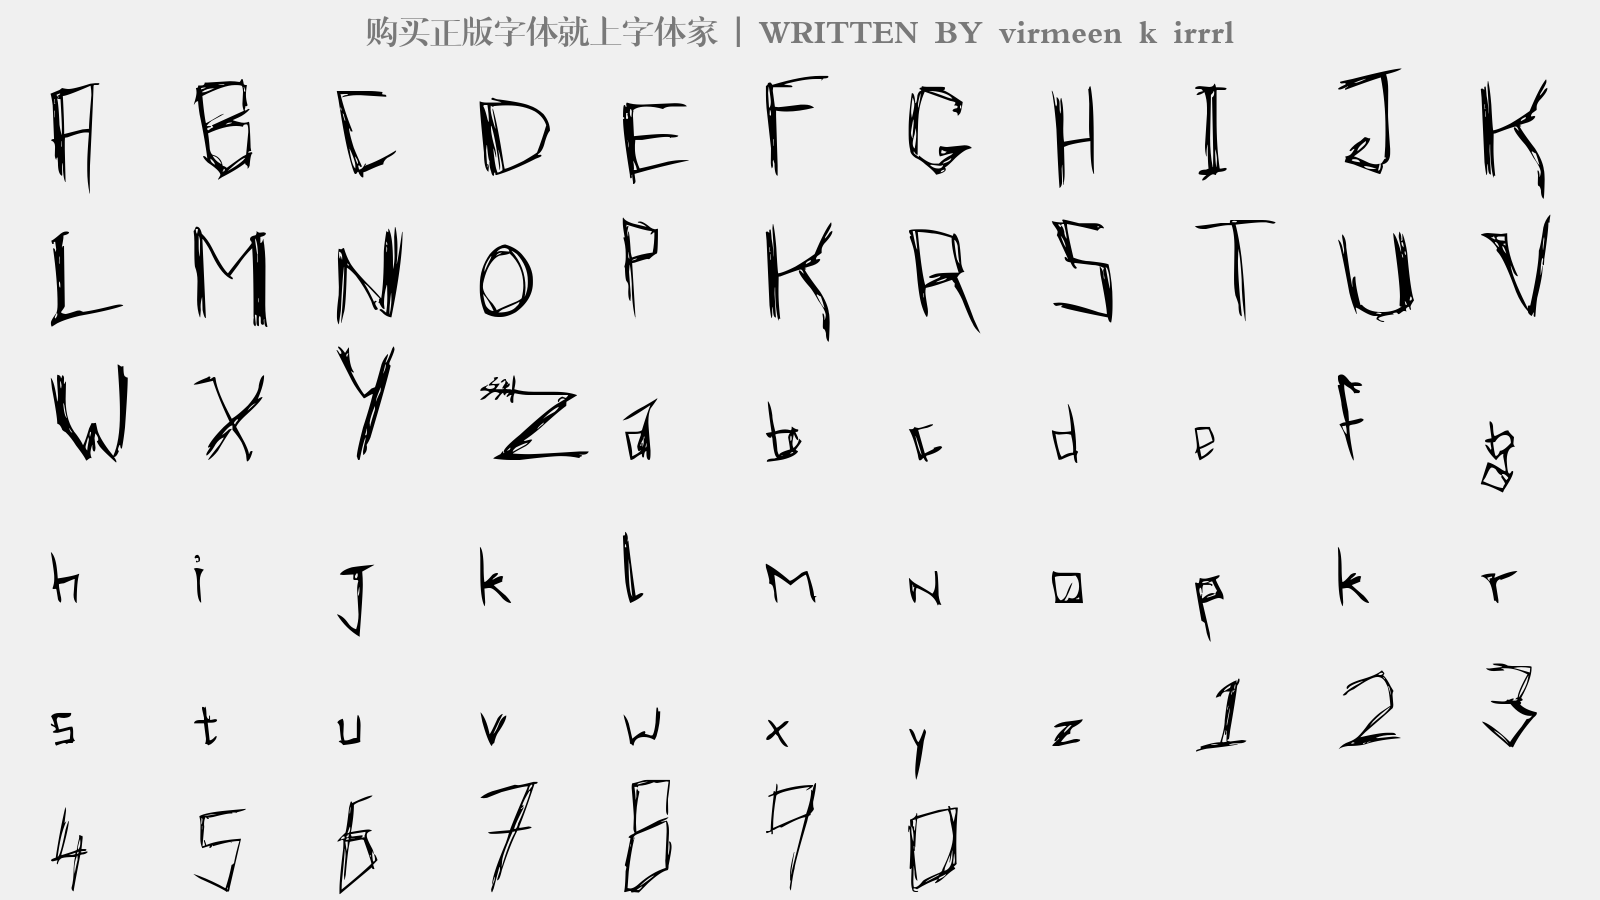 virmeen k irrrl - 大写字母/小写字母/数字